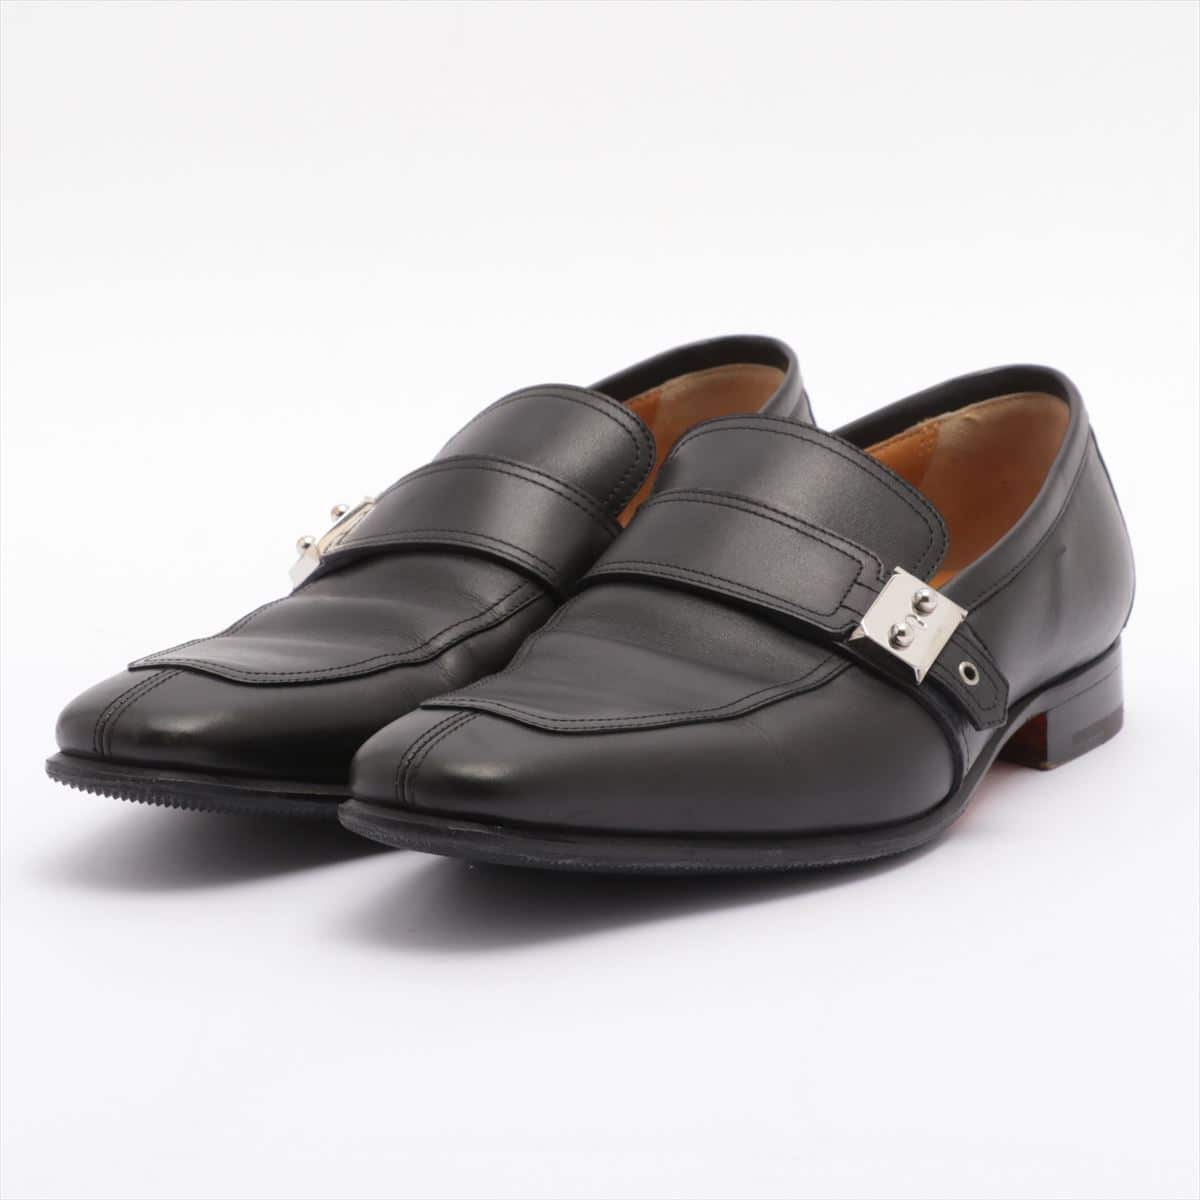 Hermès Leather Leather shoes 40 1/2 Men's Black Resoled